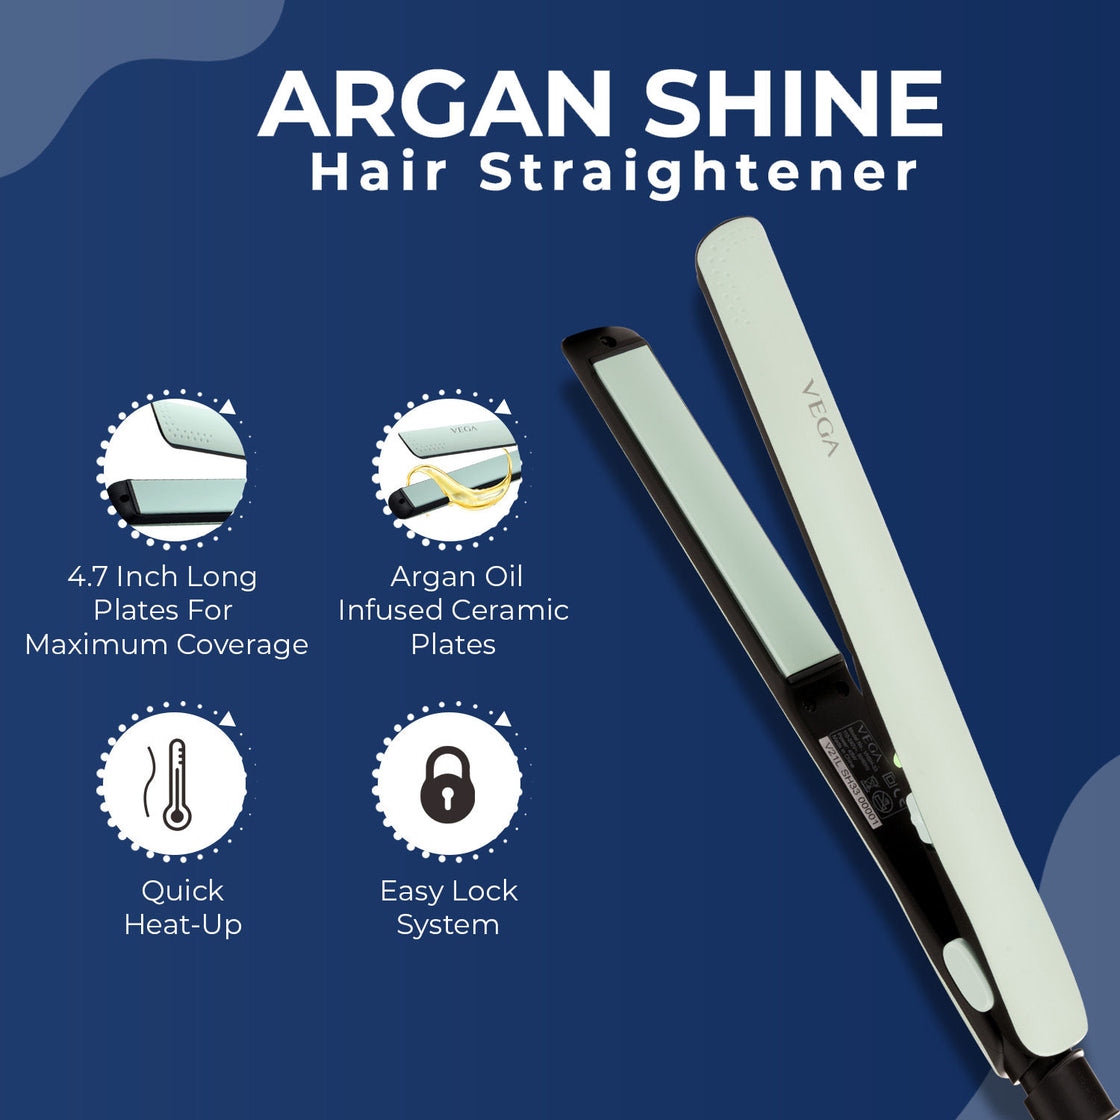 Vega Argan Shine Hair Straightener With Argan Oil Infused 3D Floating Plates - Green (Vhsh-33)-4